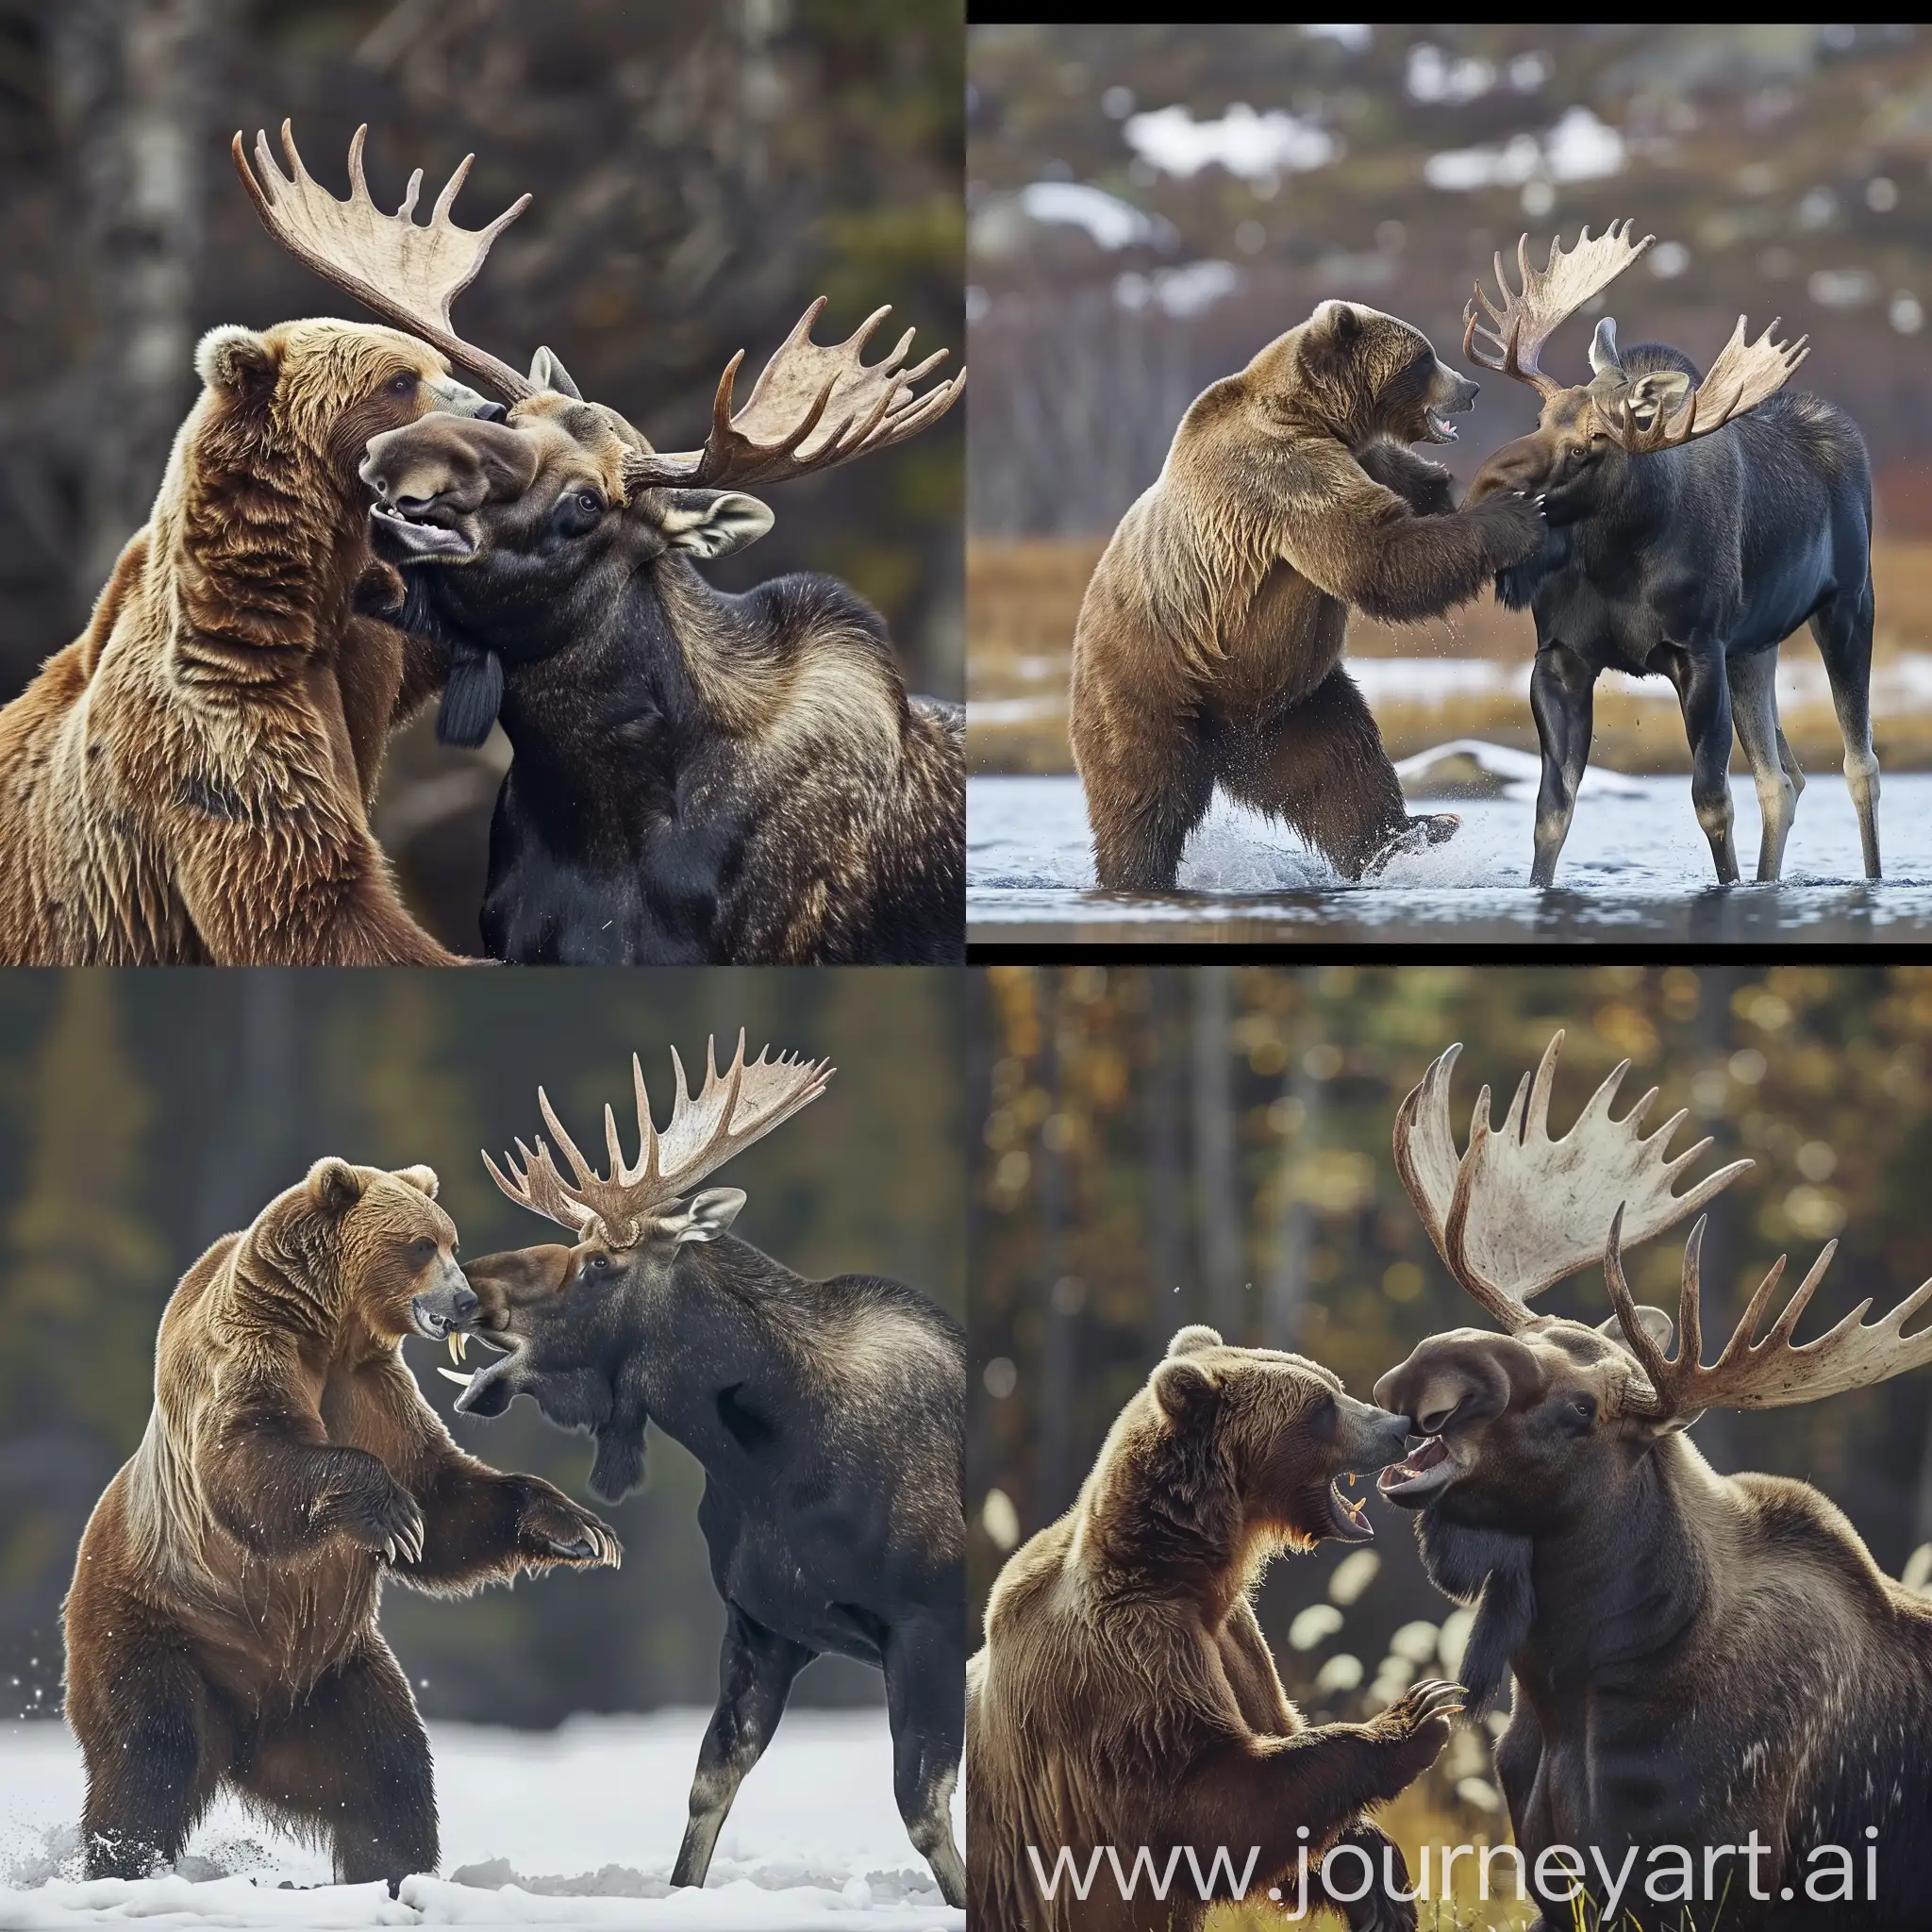 Epic-Battle-Kodiak-Bear-vs-Bull-Moose-Wildlife-Encounter